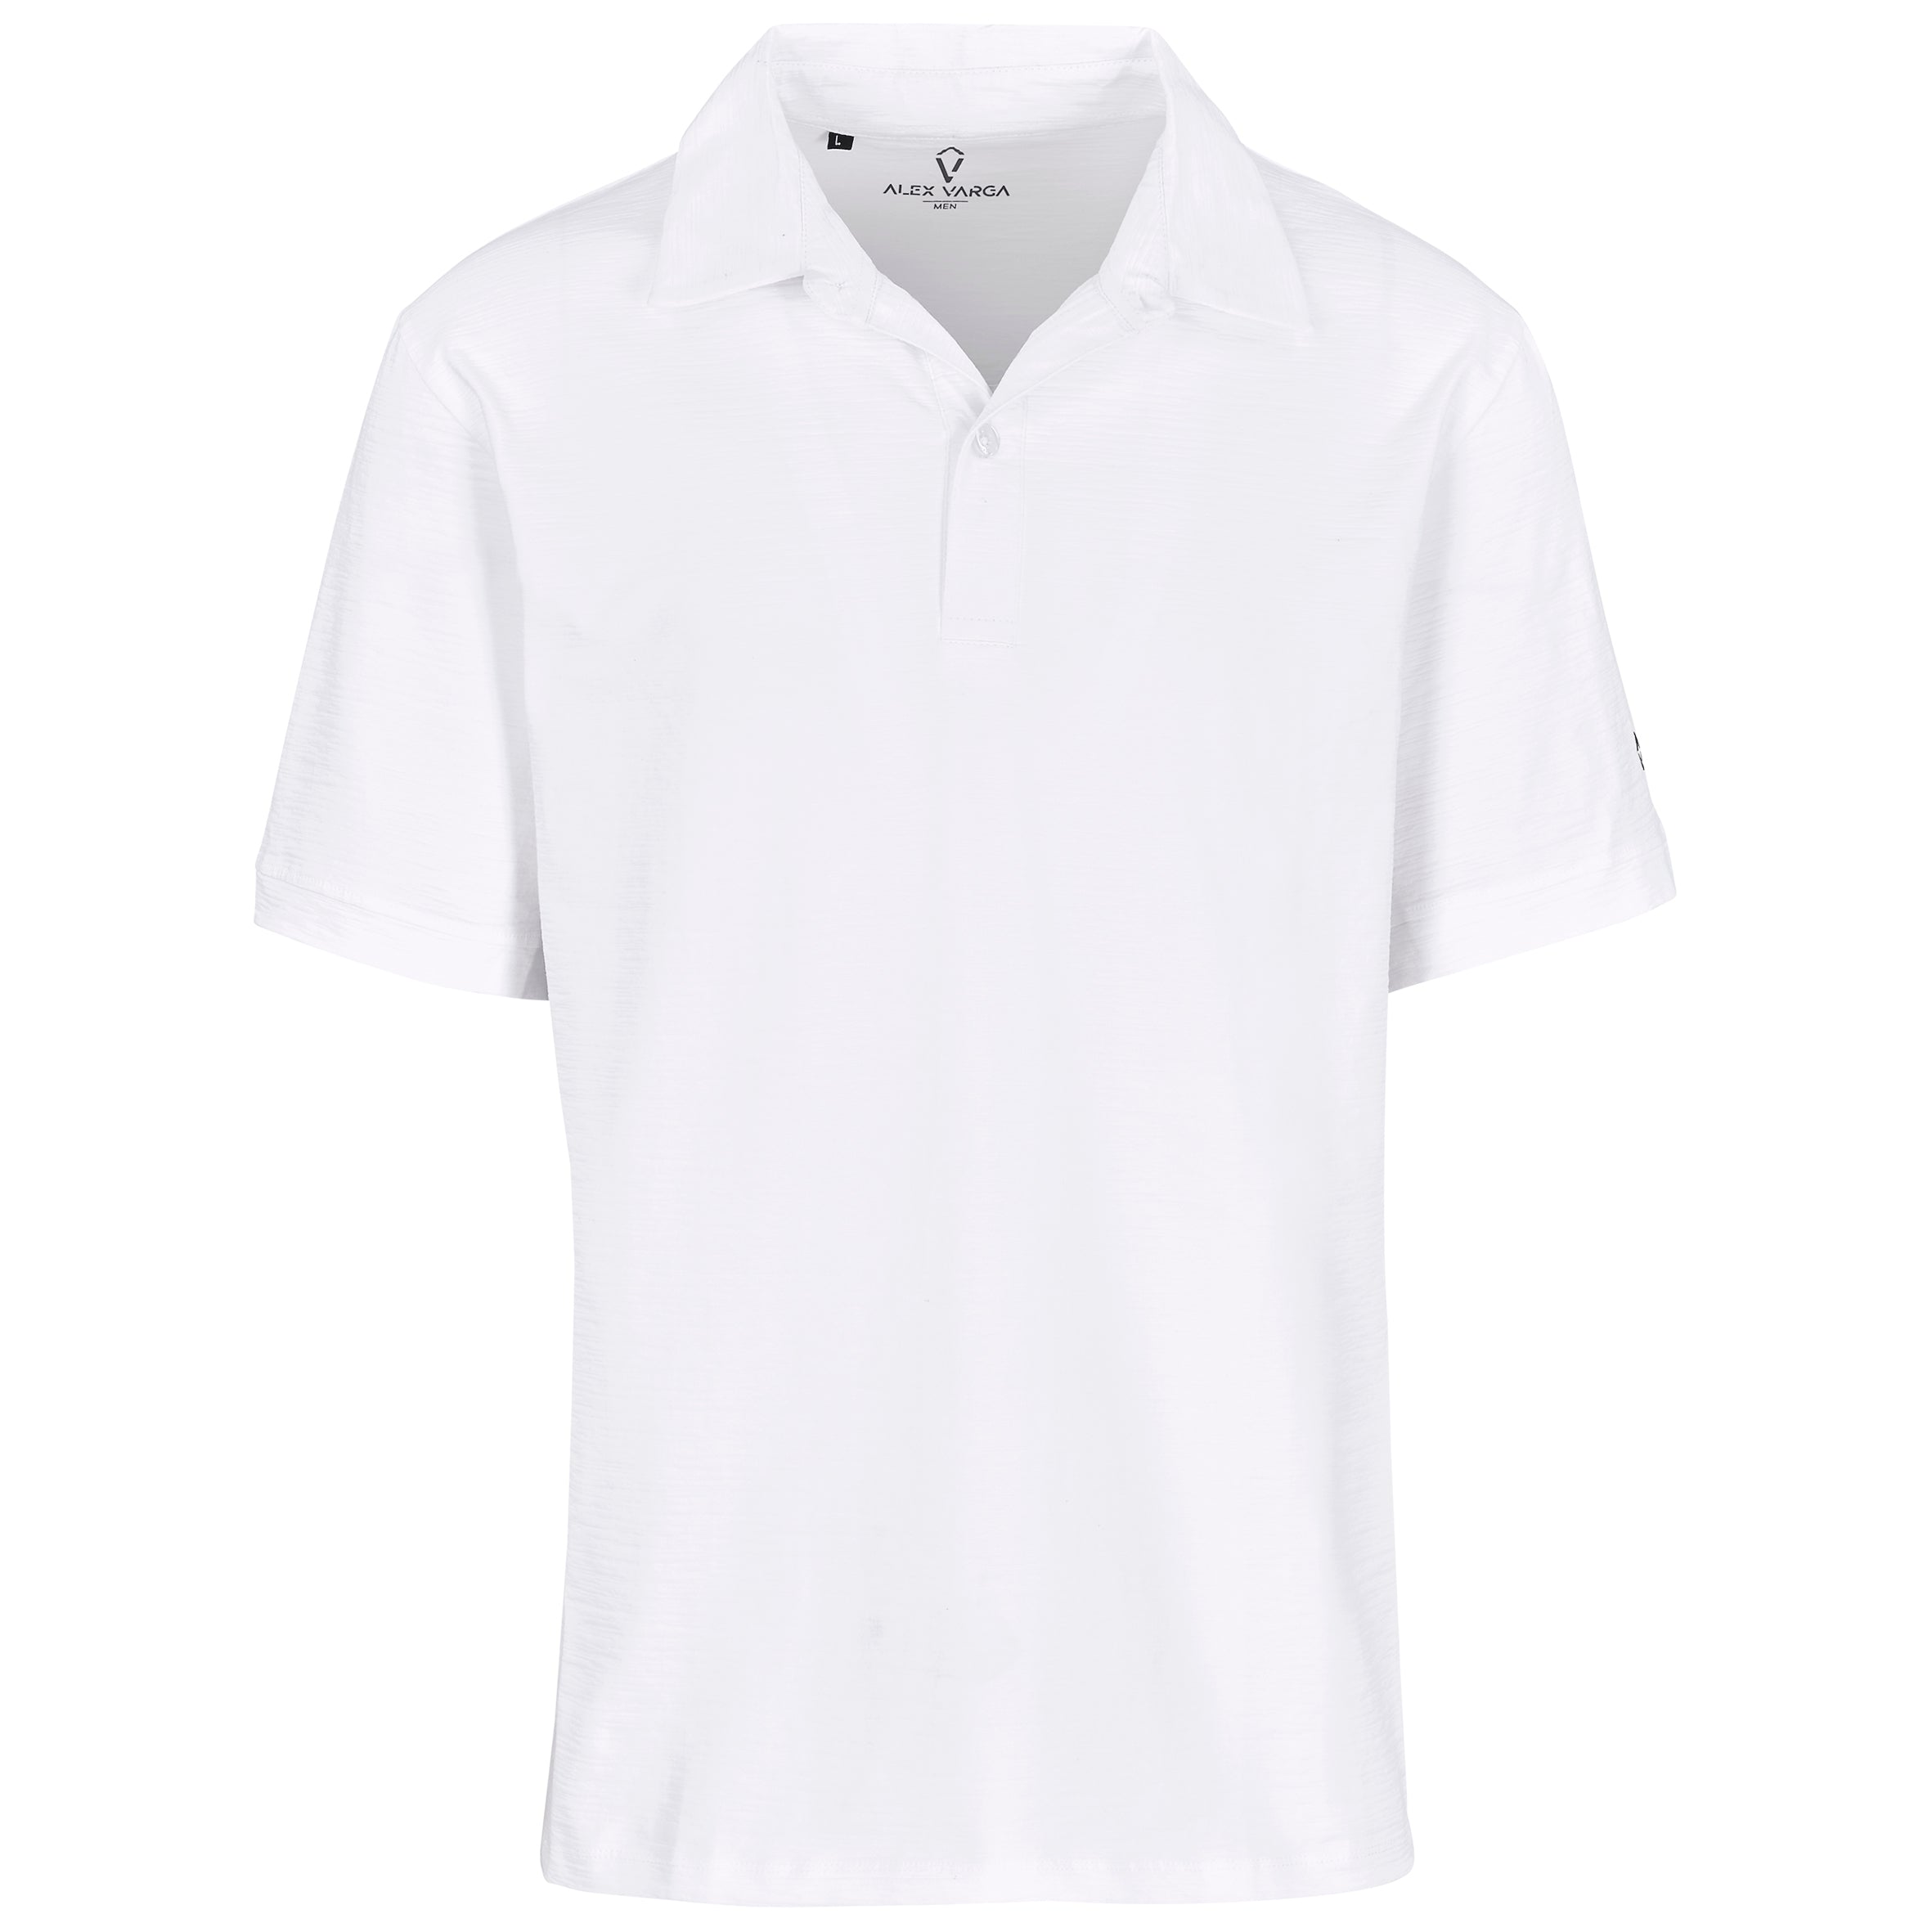 Mens Constantine Golf Shirt 2XL / White / W